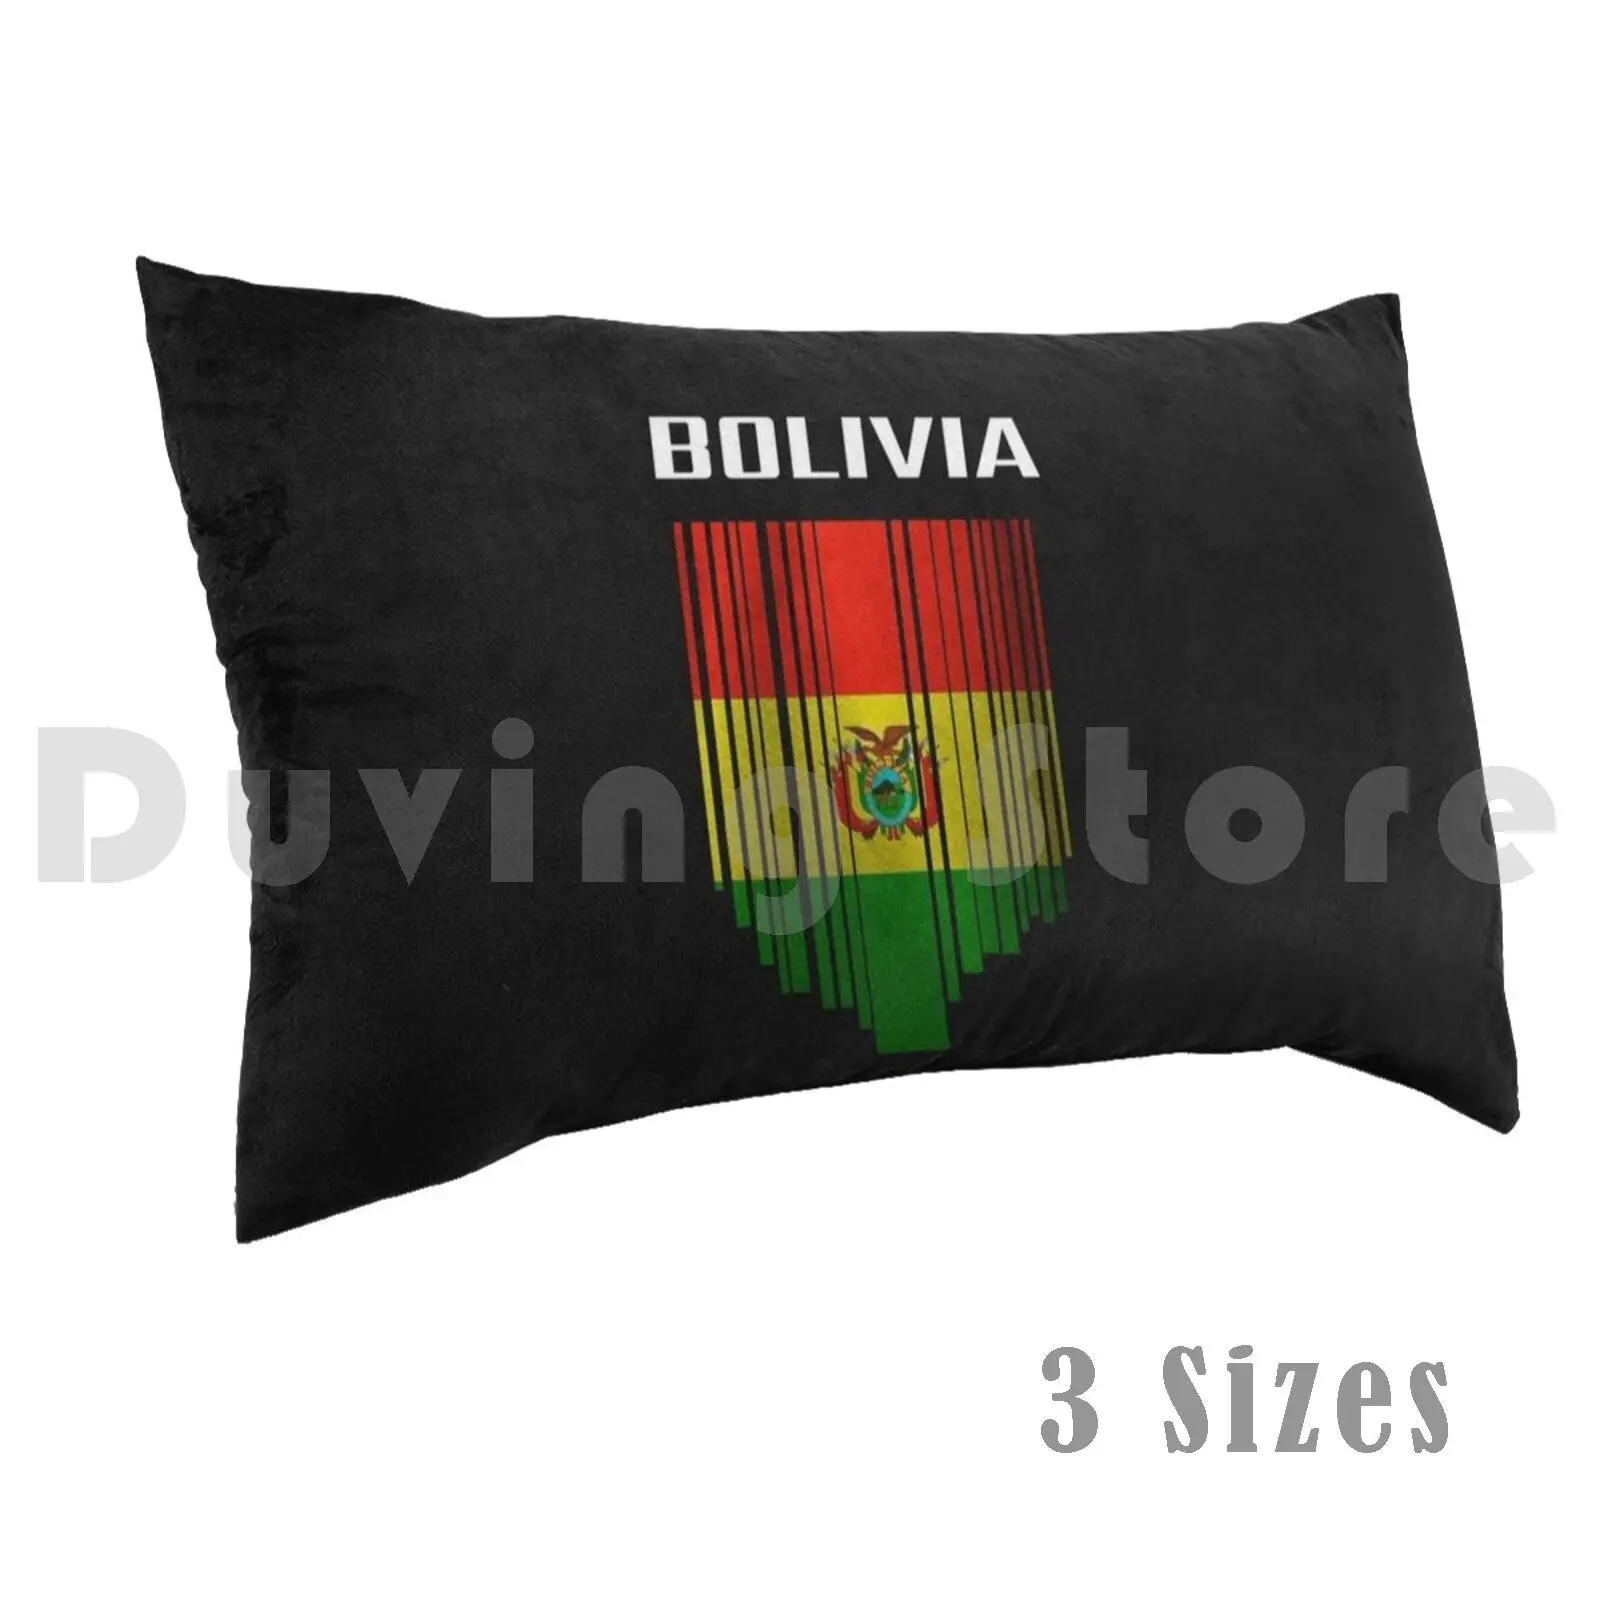 

Чехол с подушкой и флагом Боливии 50x75, чехол «сделай сам» с флагом Боливии, флагом мира, флагом Боливии, флагом Боливии